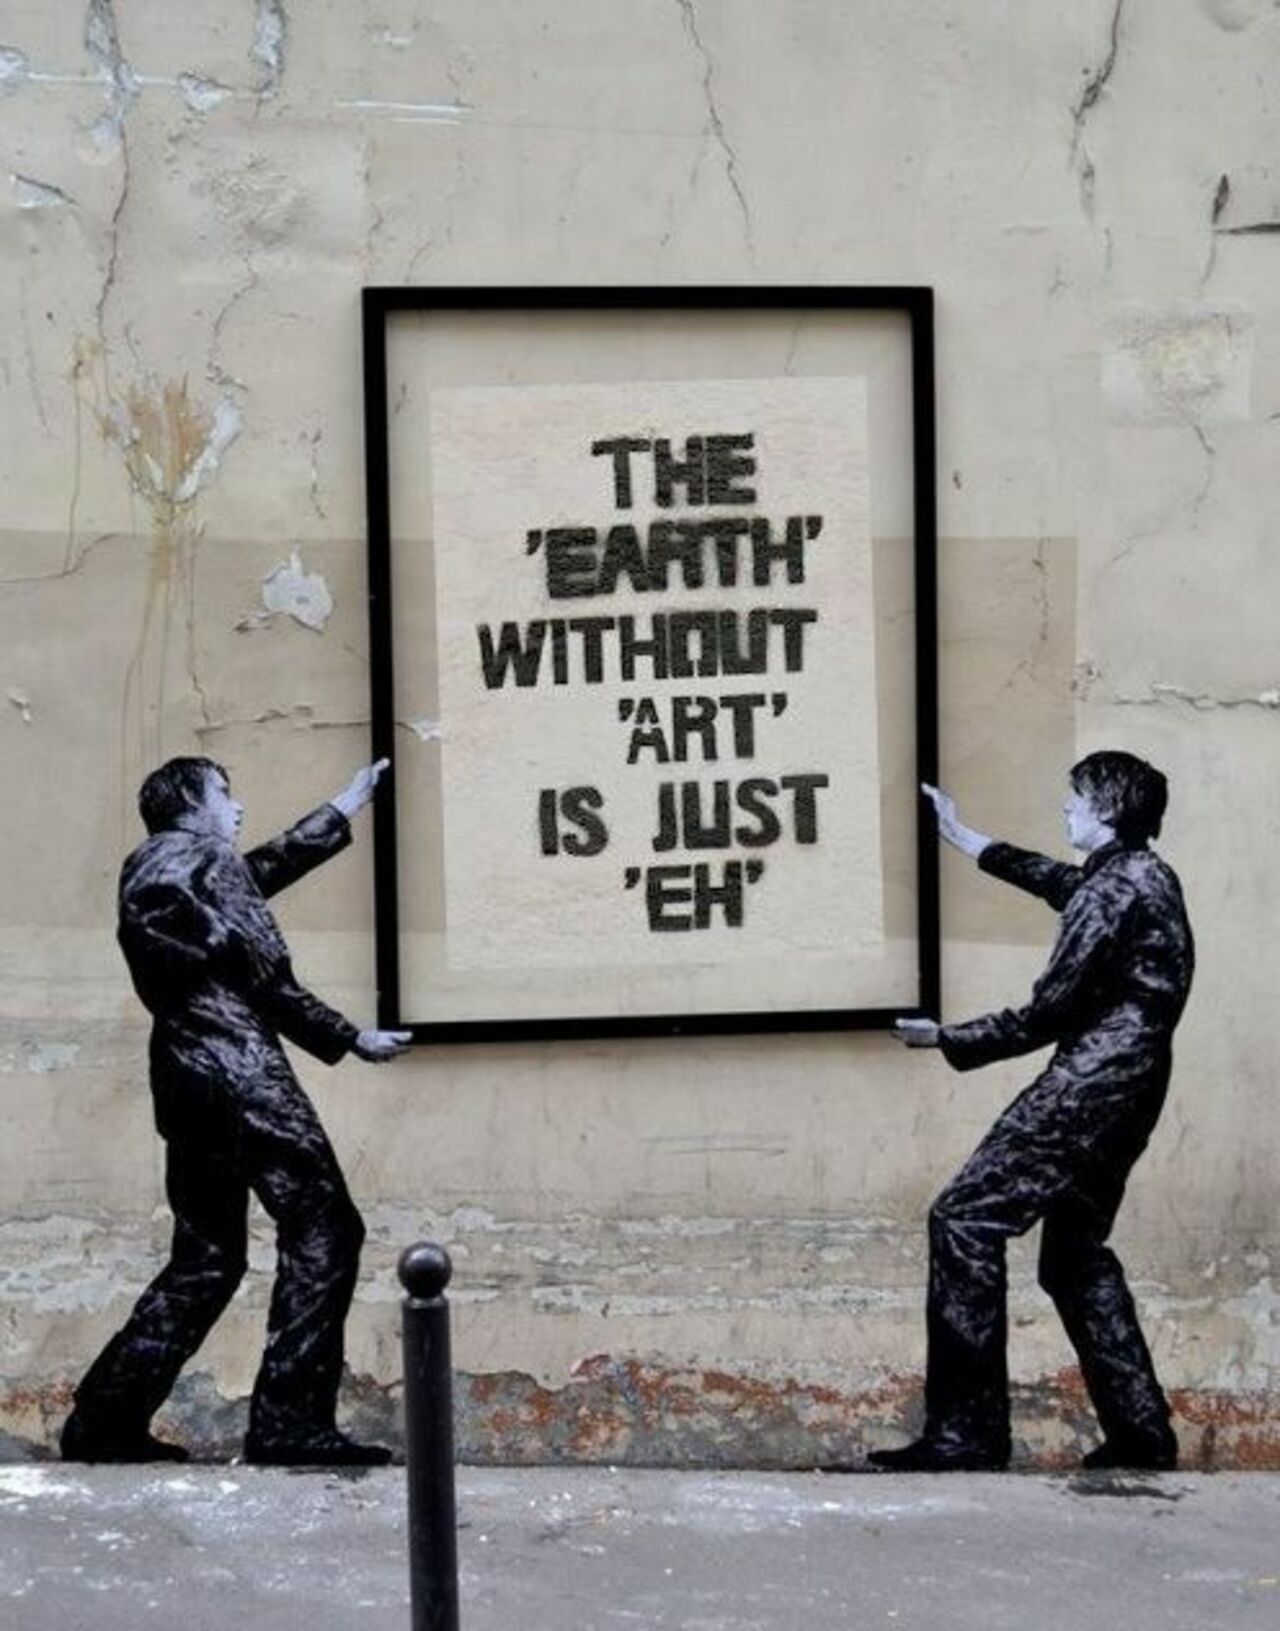 " The 'Earth' Without 'Art' is Just 'Eh' "Banksy#streetart #urbanart #graffiti #stencil https://t.co/JdhYAPH126